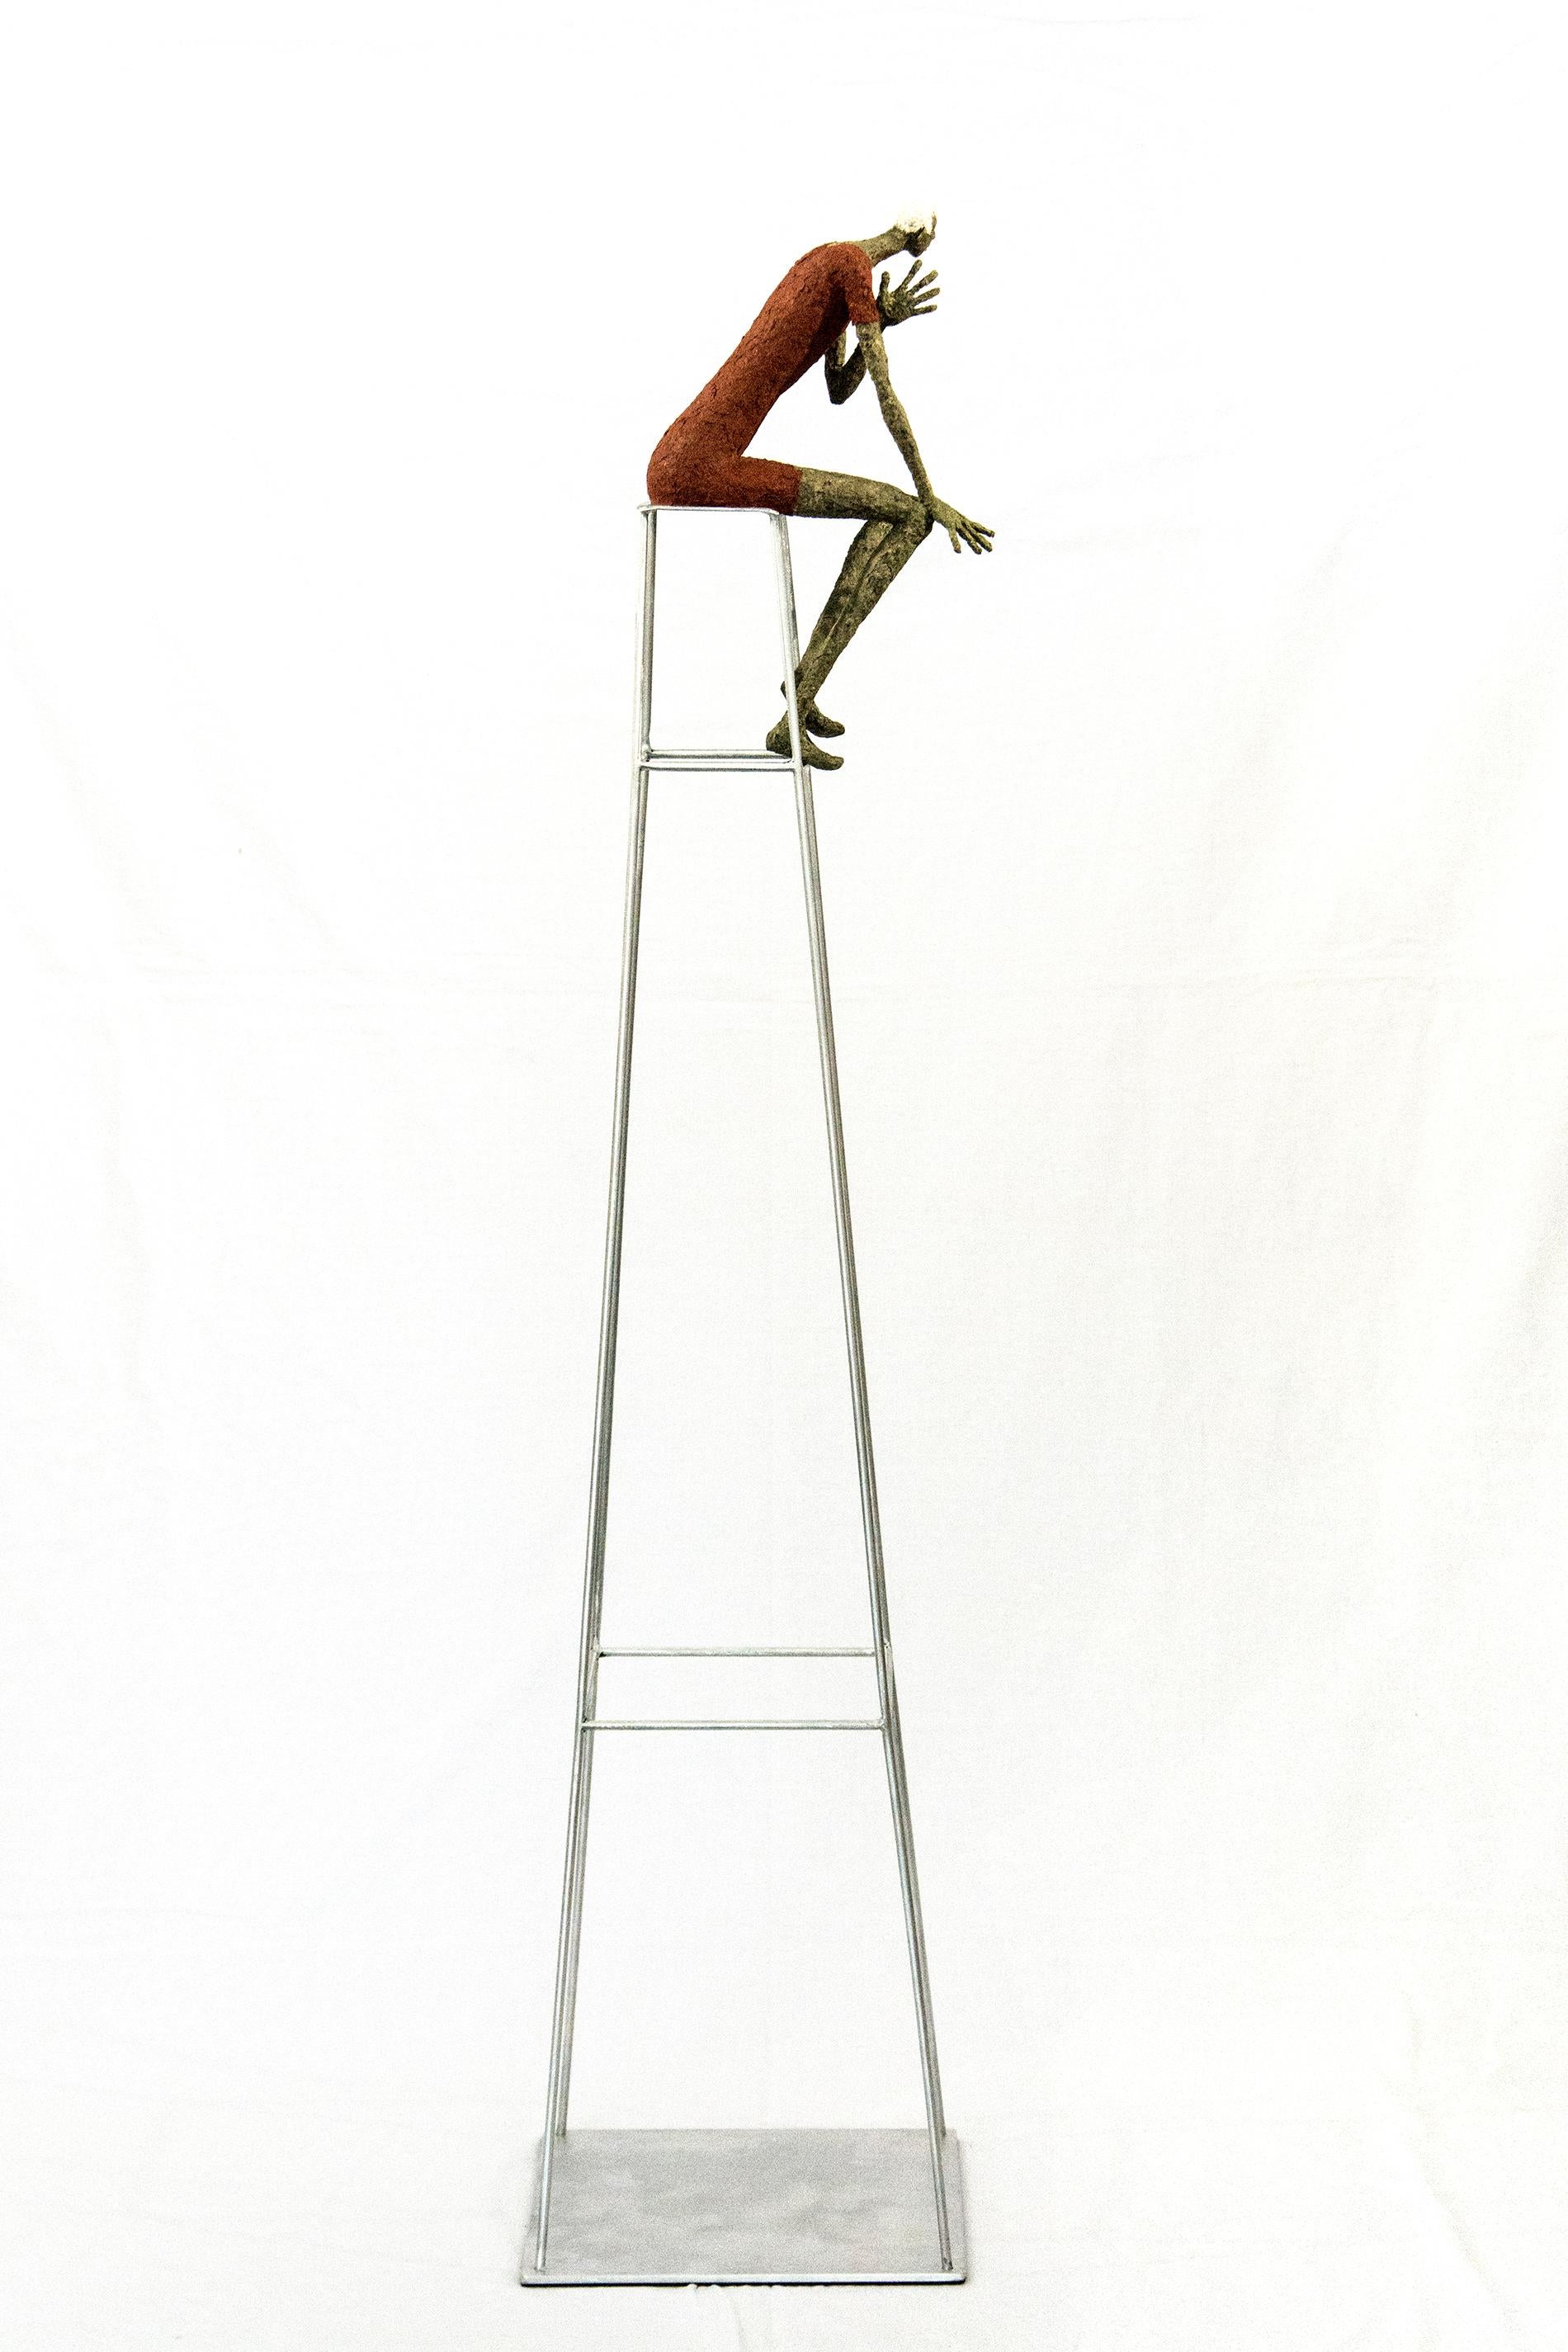 Swimmer - tall, expressive, textured, male, figurative, paper Mache sculpture - Contemporary Sculpture by Paul Duval